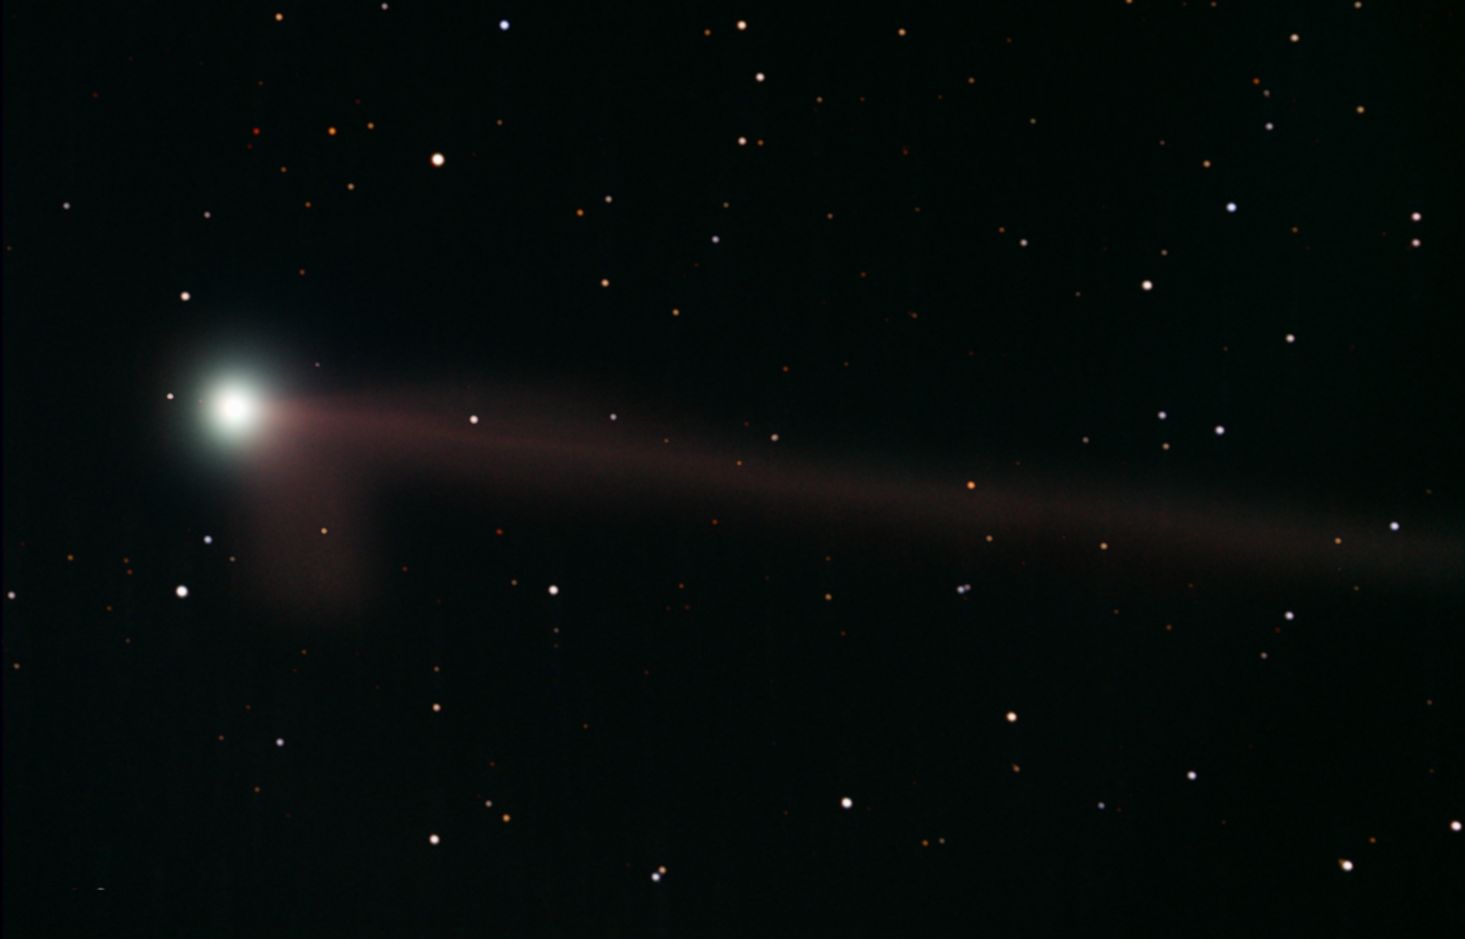 Comet Pojmanski